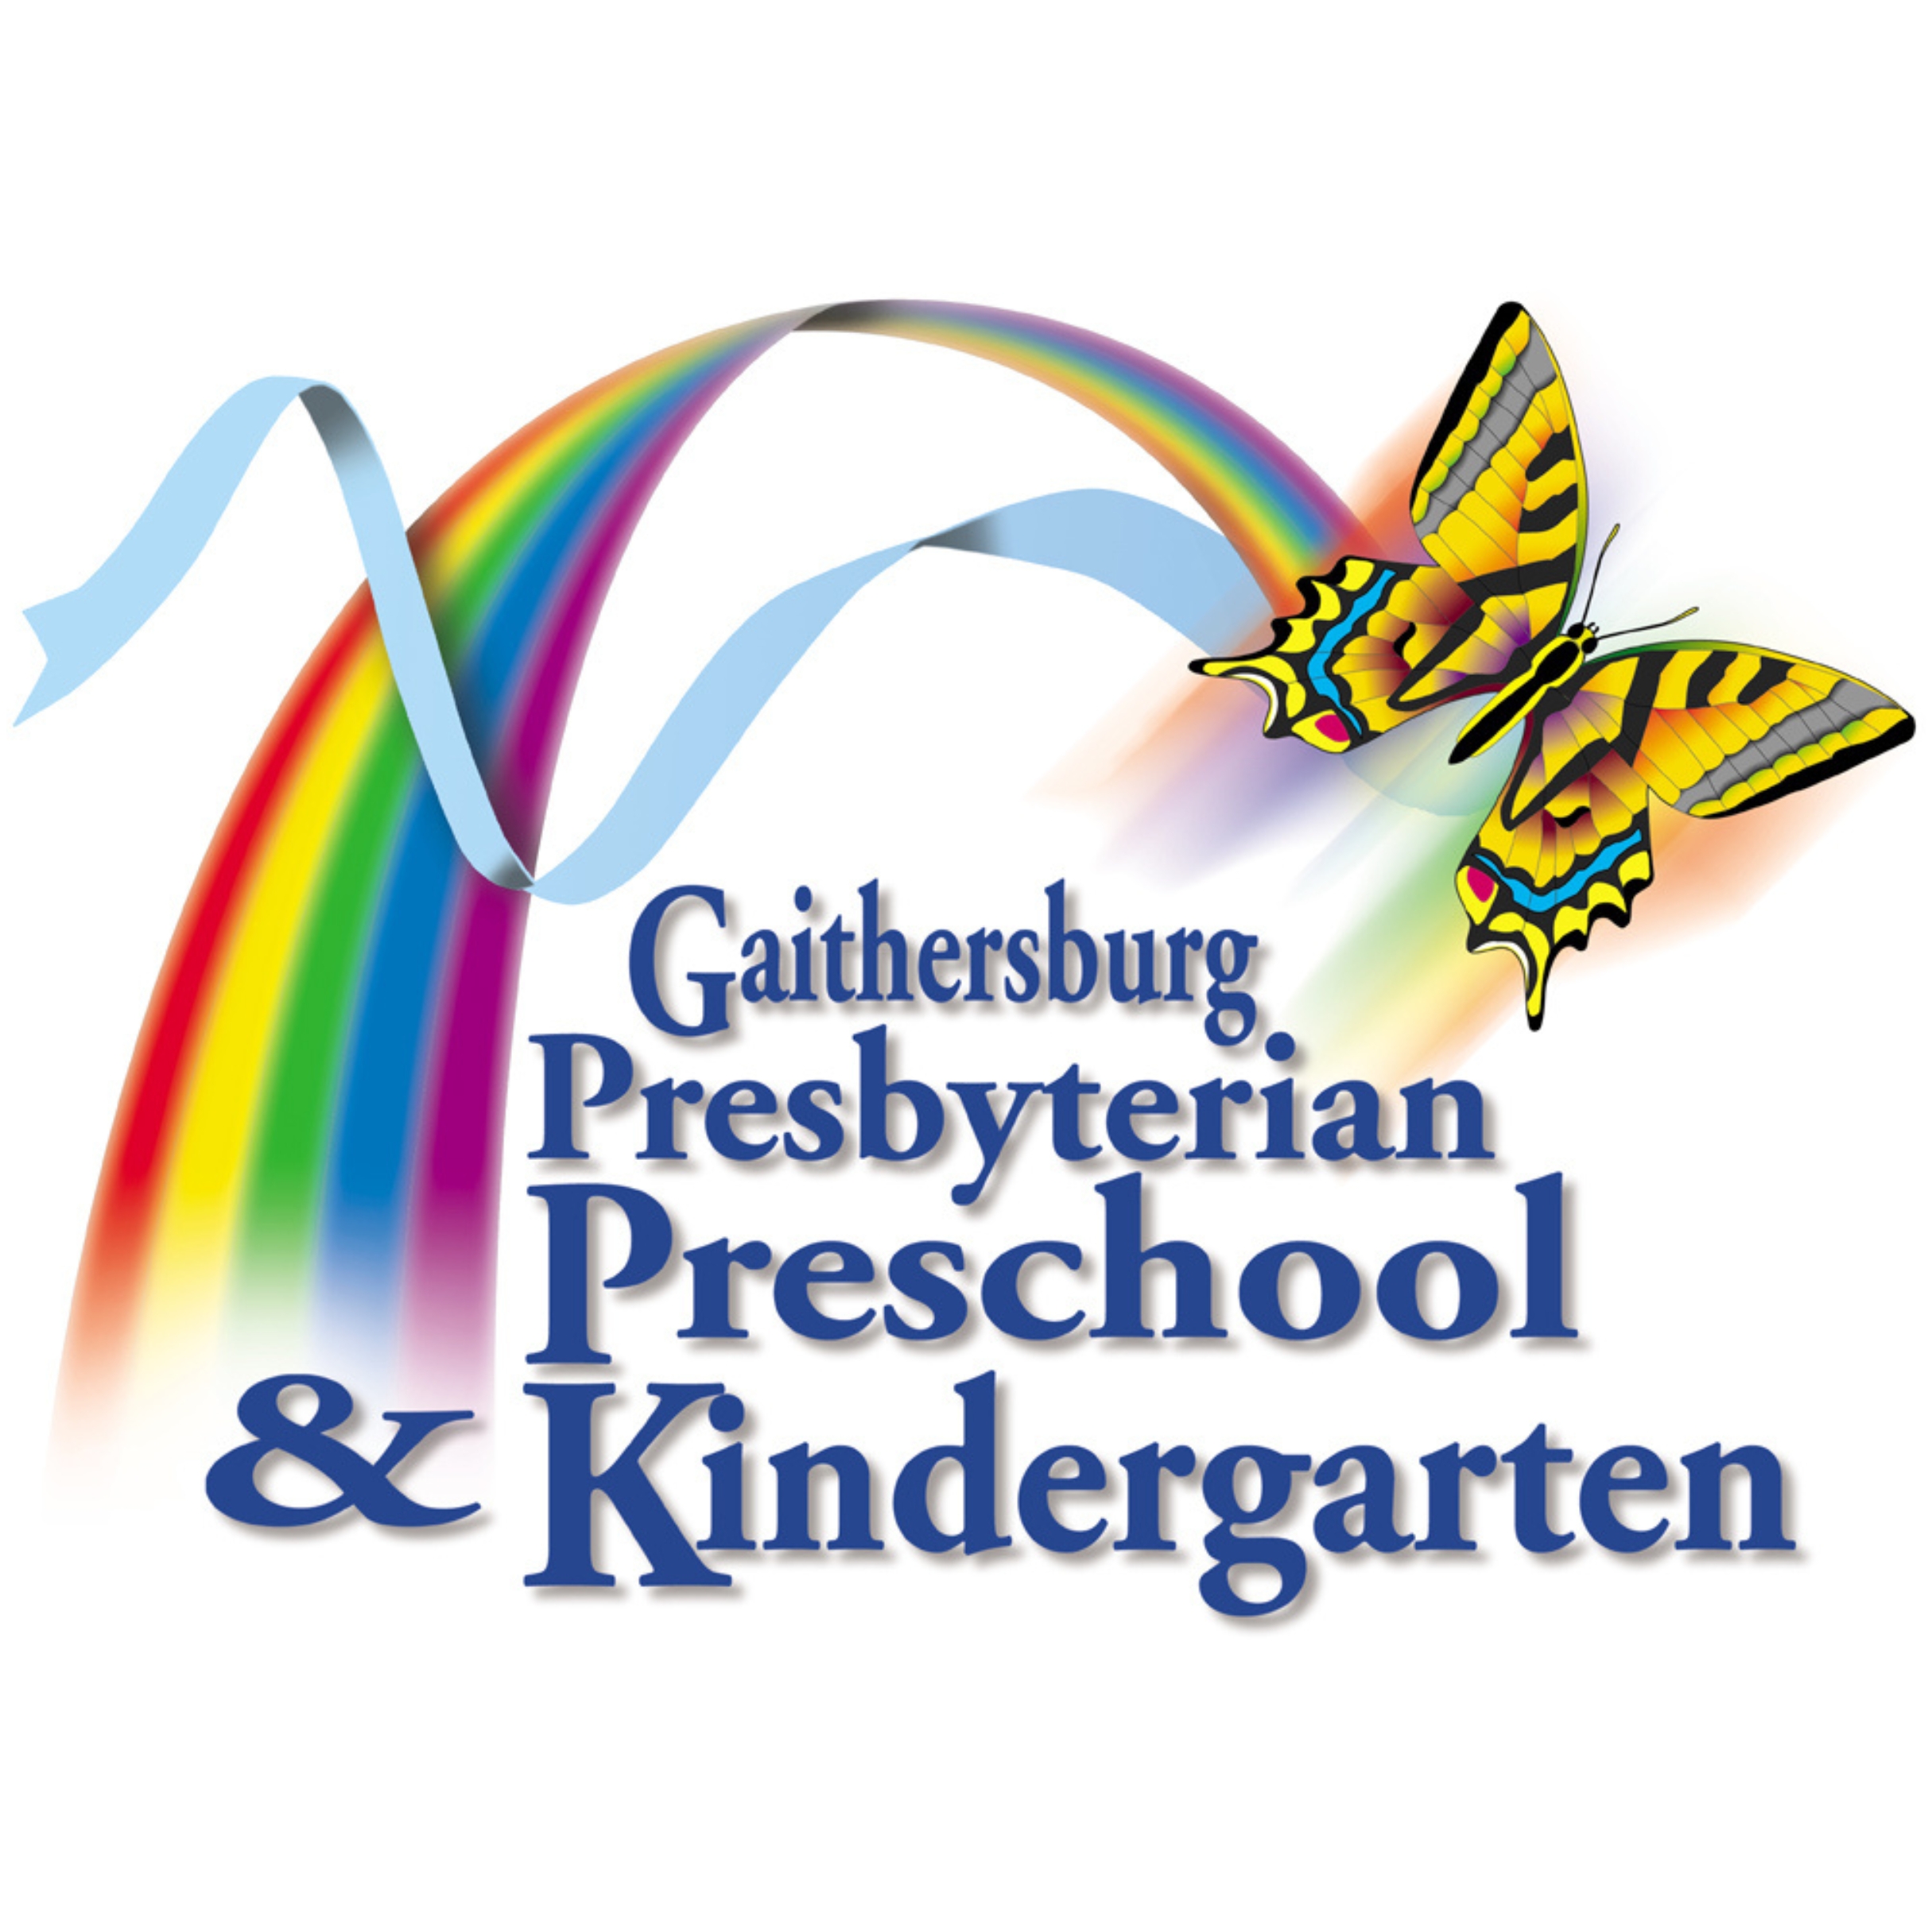 Gaithersburg Presbyterian Preschool & Kindergarten Logo with butterfly, ribbon, and rainbow